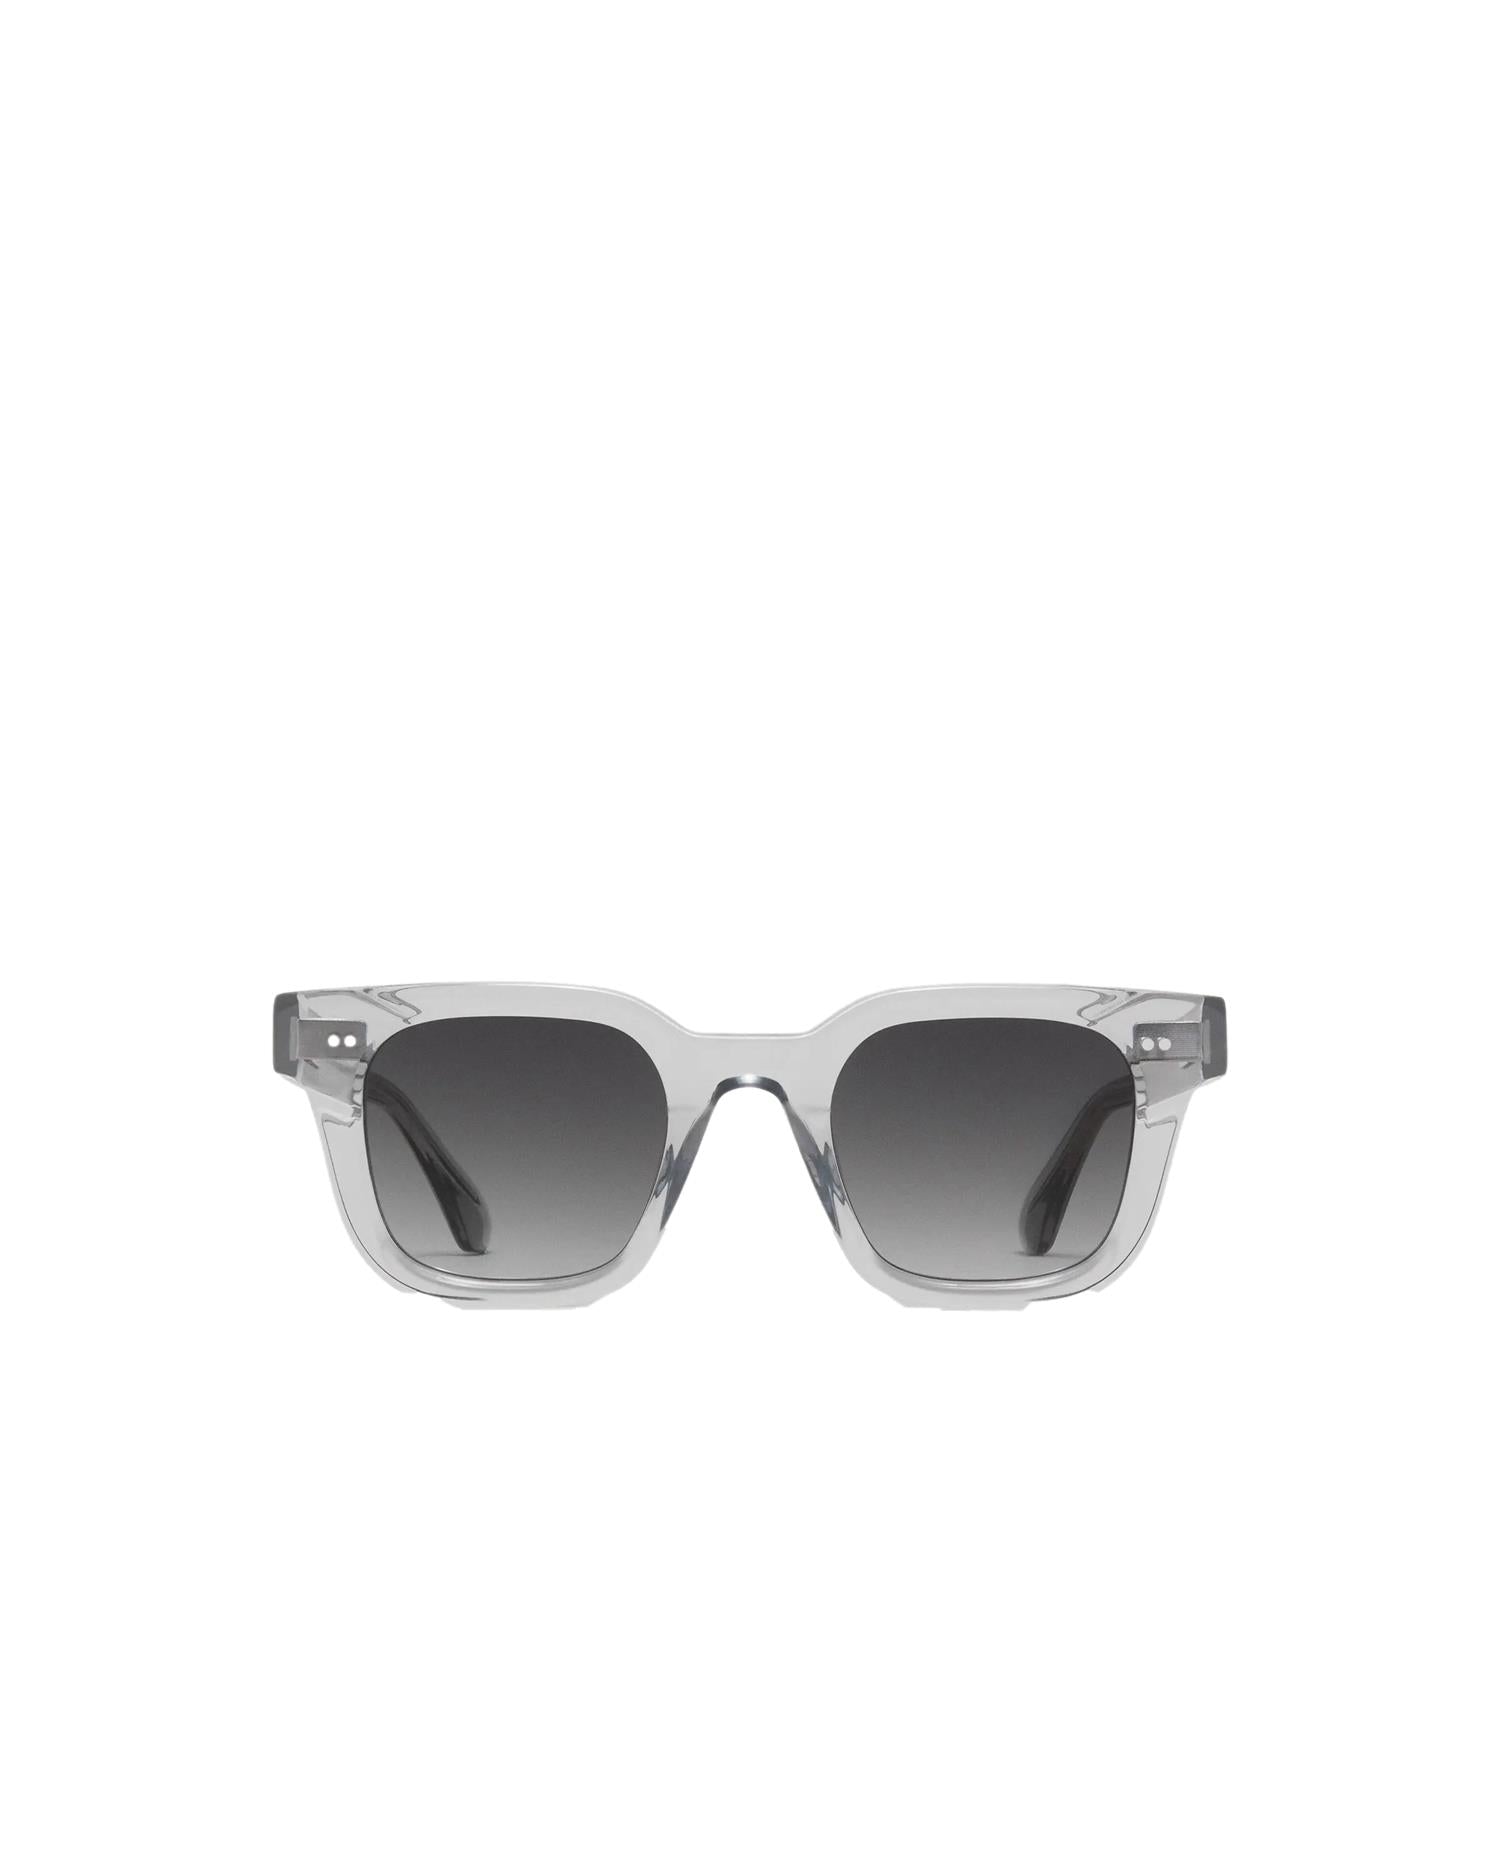 Chimi Eyewear 04 Grey Solbriller Grå